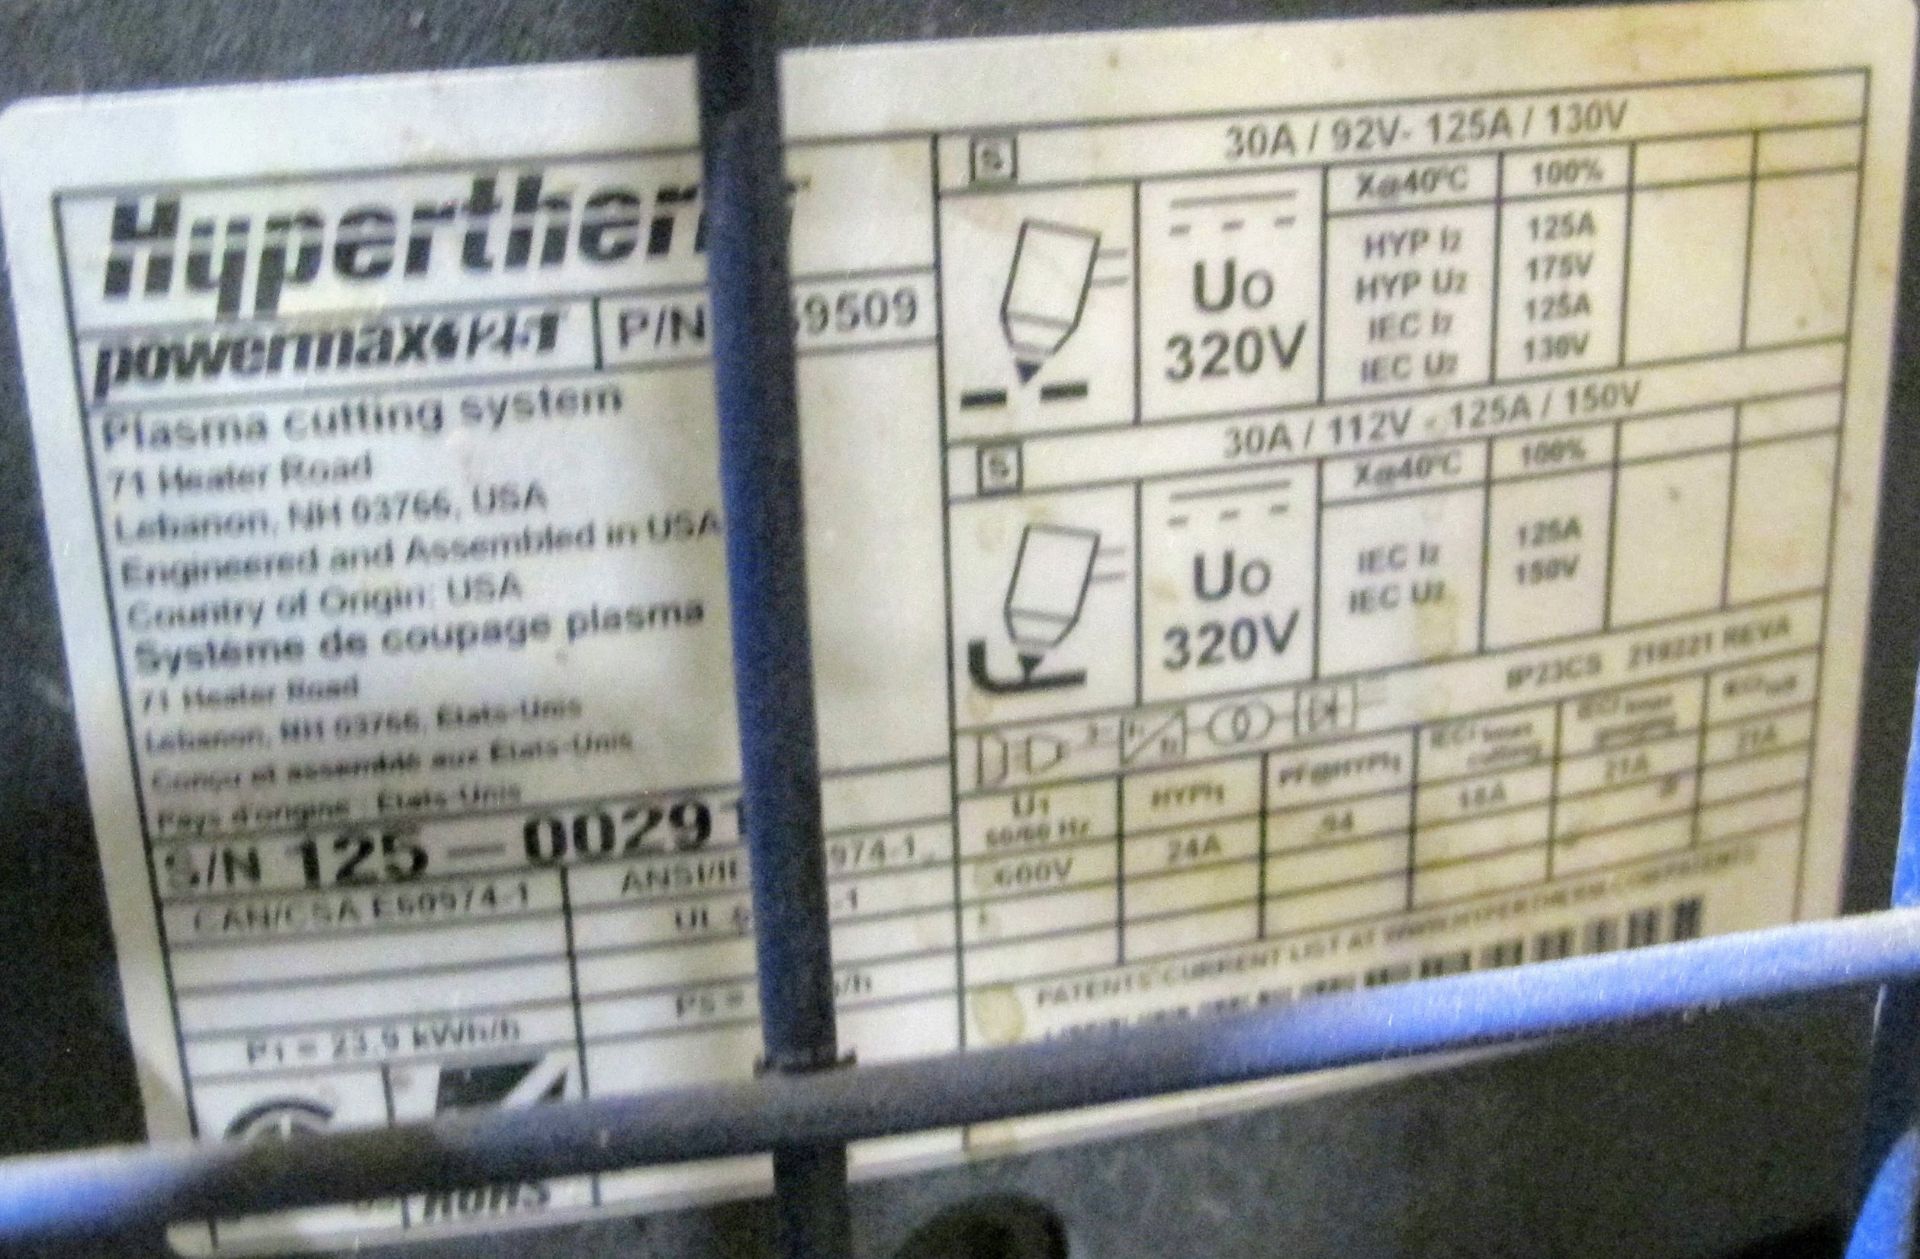 MACHITECH EC-300 PLASMA CUTTING TABLE, S/N 53151, CNC CONTROL, HYPERTHERM POWERMAX 125 POWER SUPPLY, - Image 15 of 17